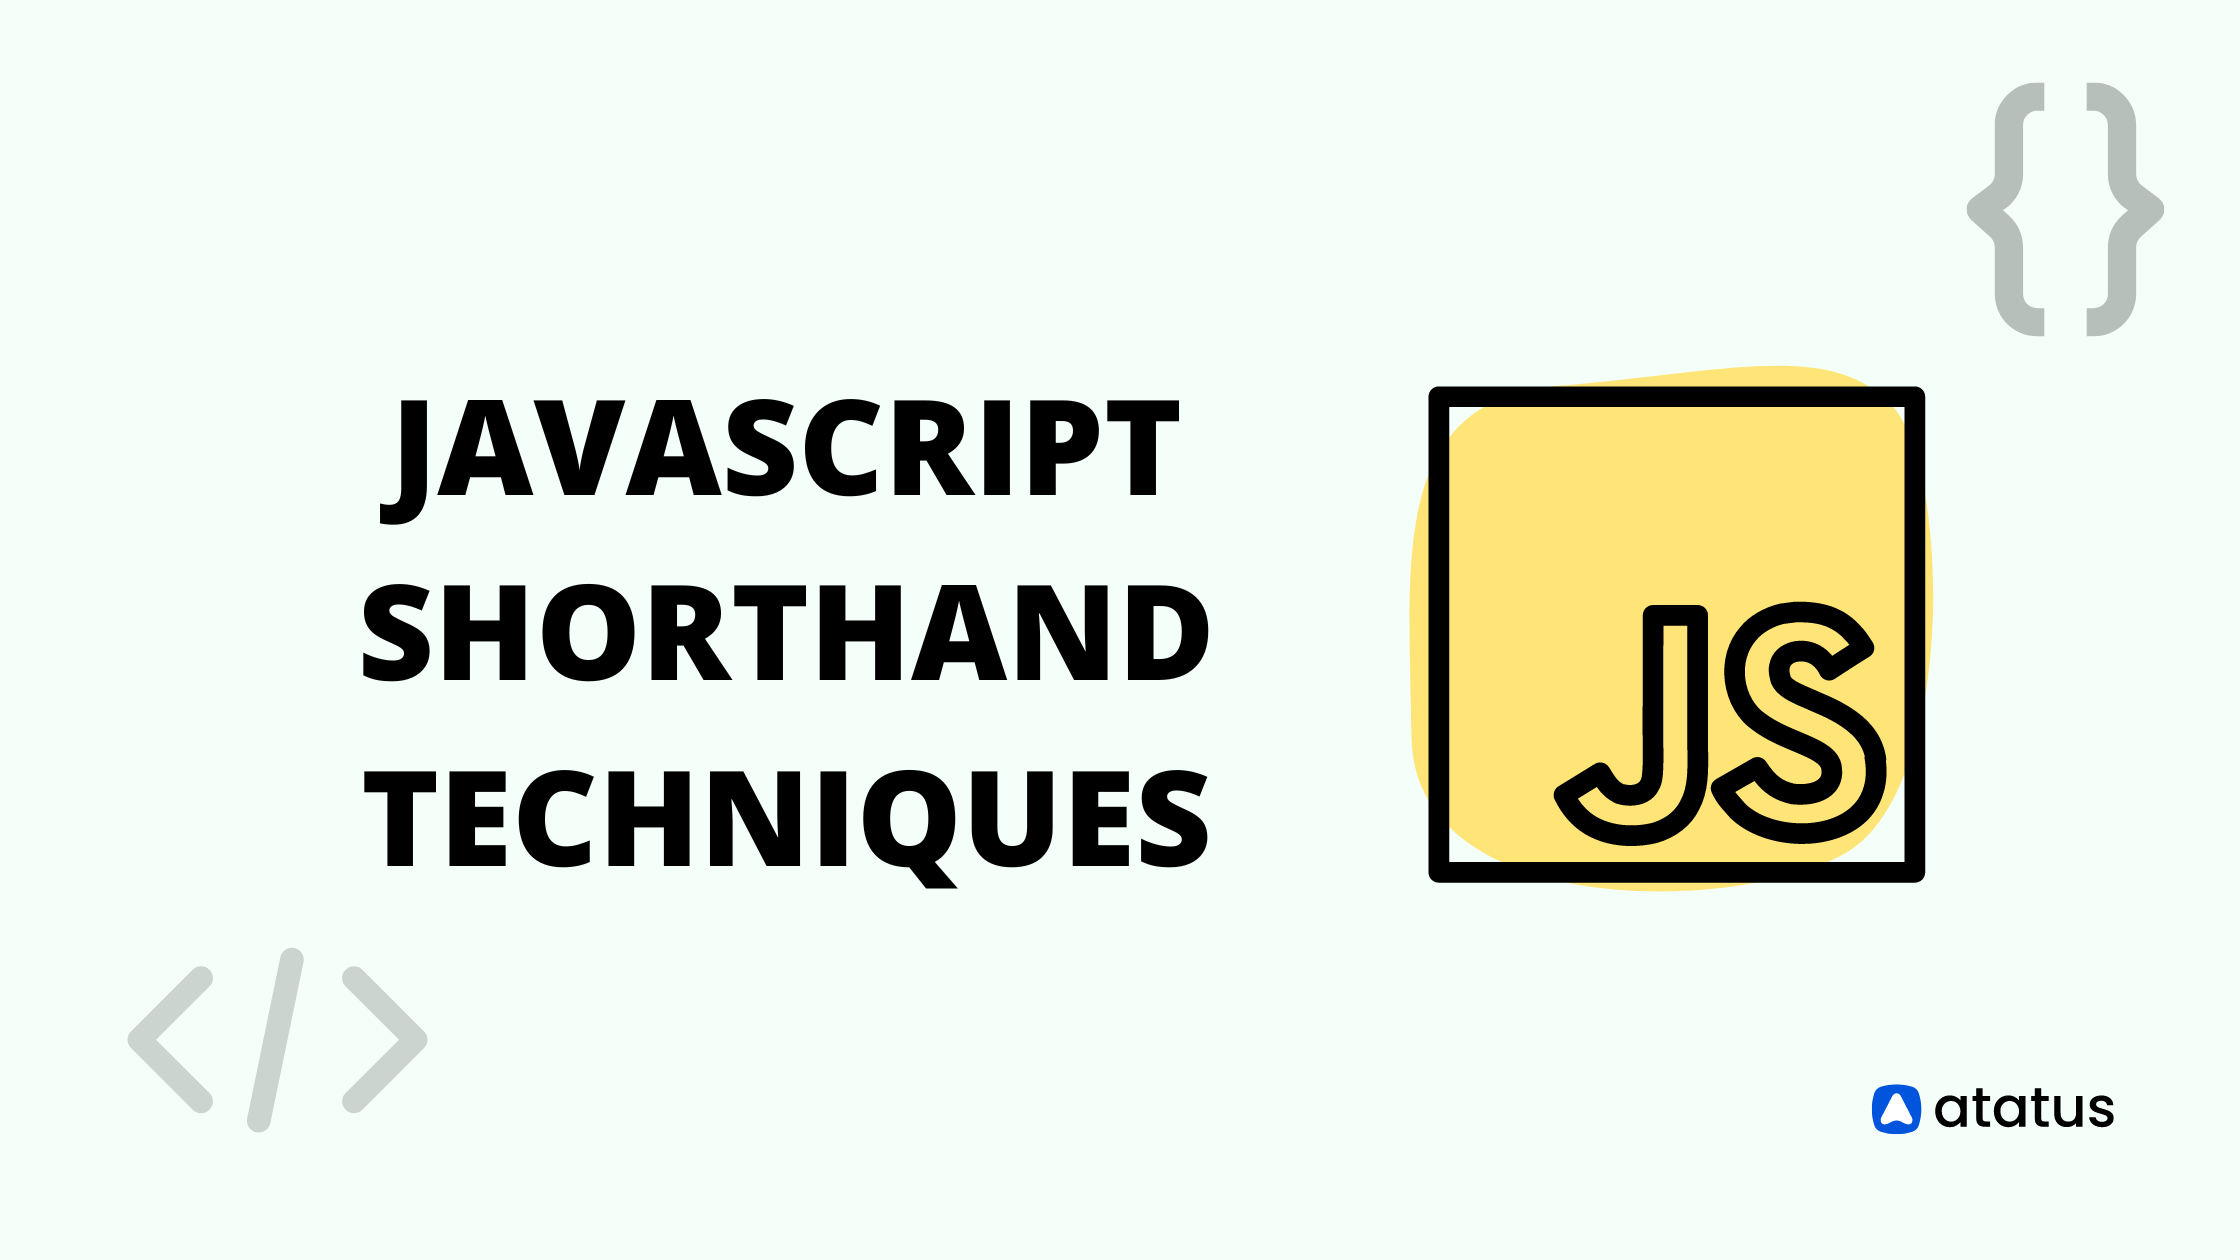 shorthand assignment javascript